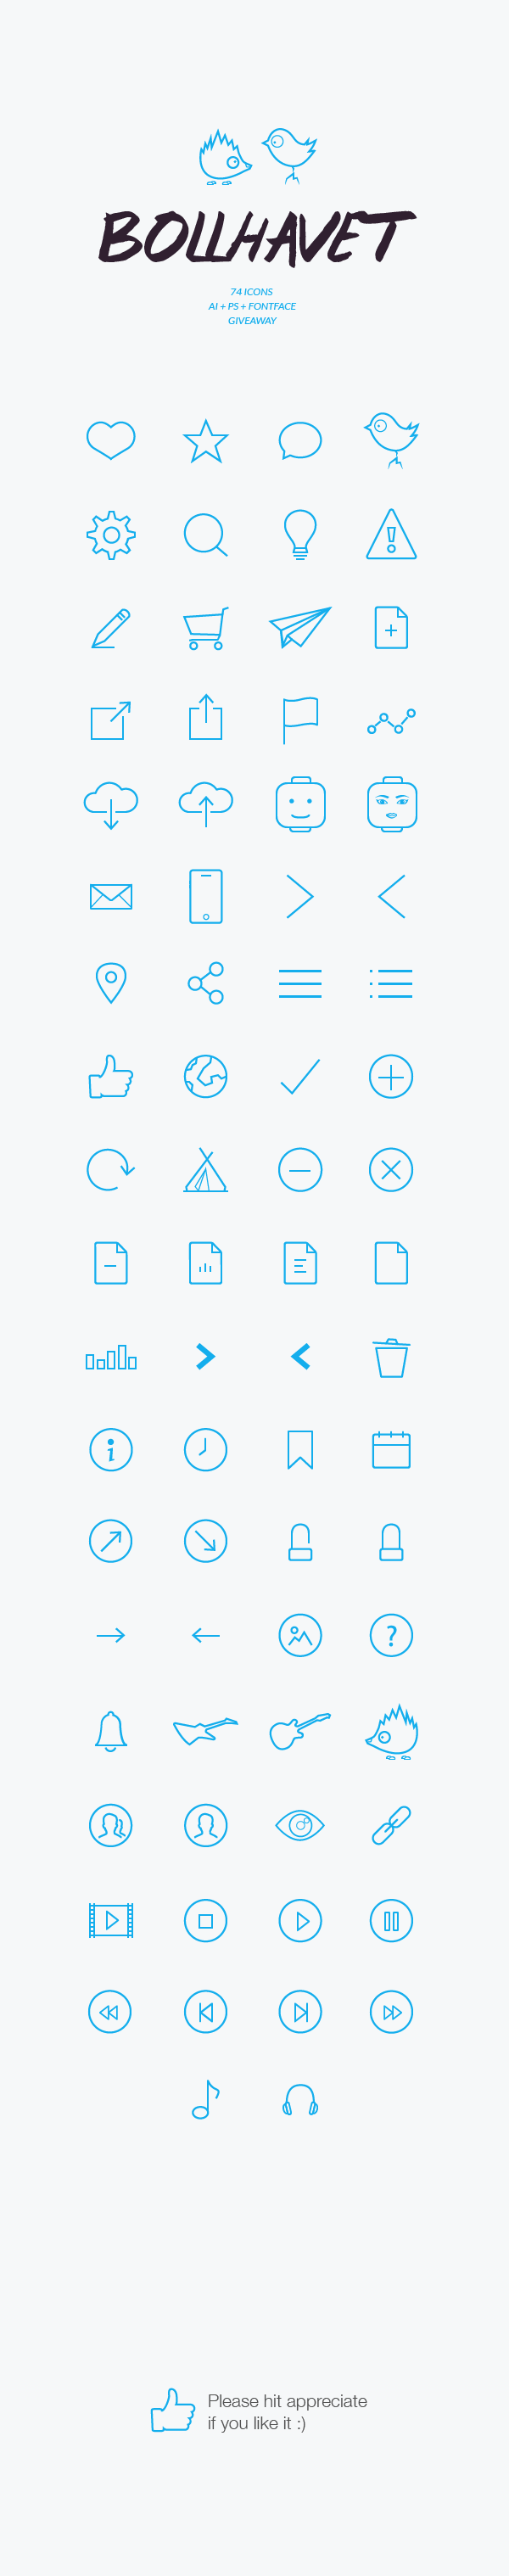 Bollhavet 74 free flat icon set by Jonas Lampe Persson in 2014年8月份汇总的25个免费的扁平化图标套装下载